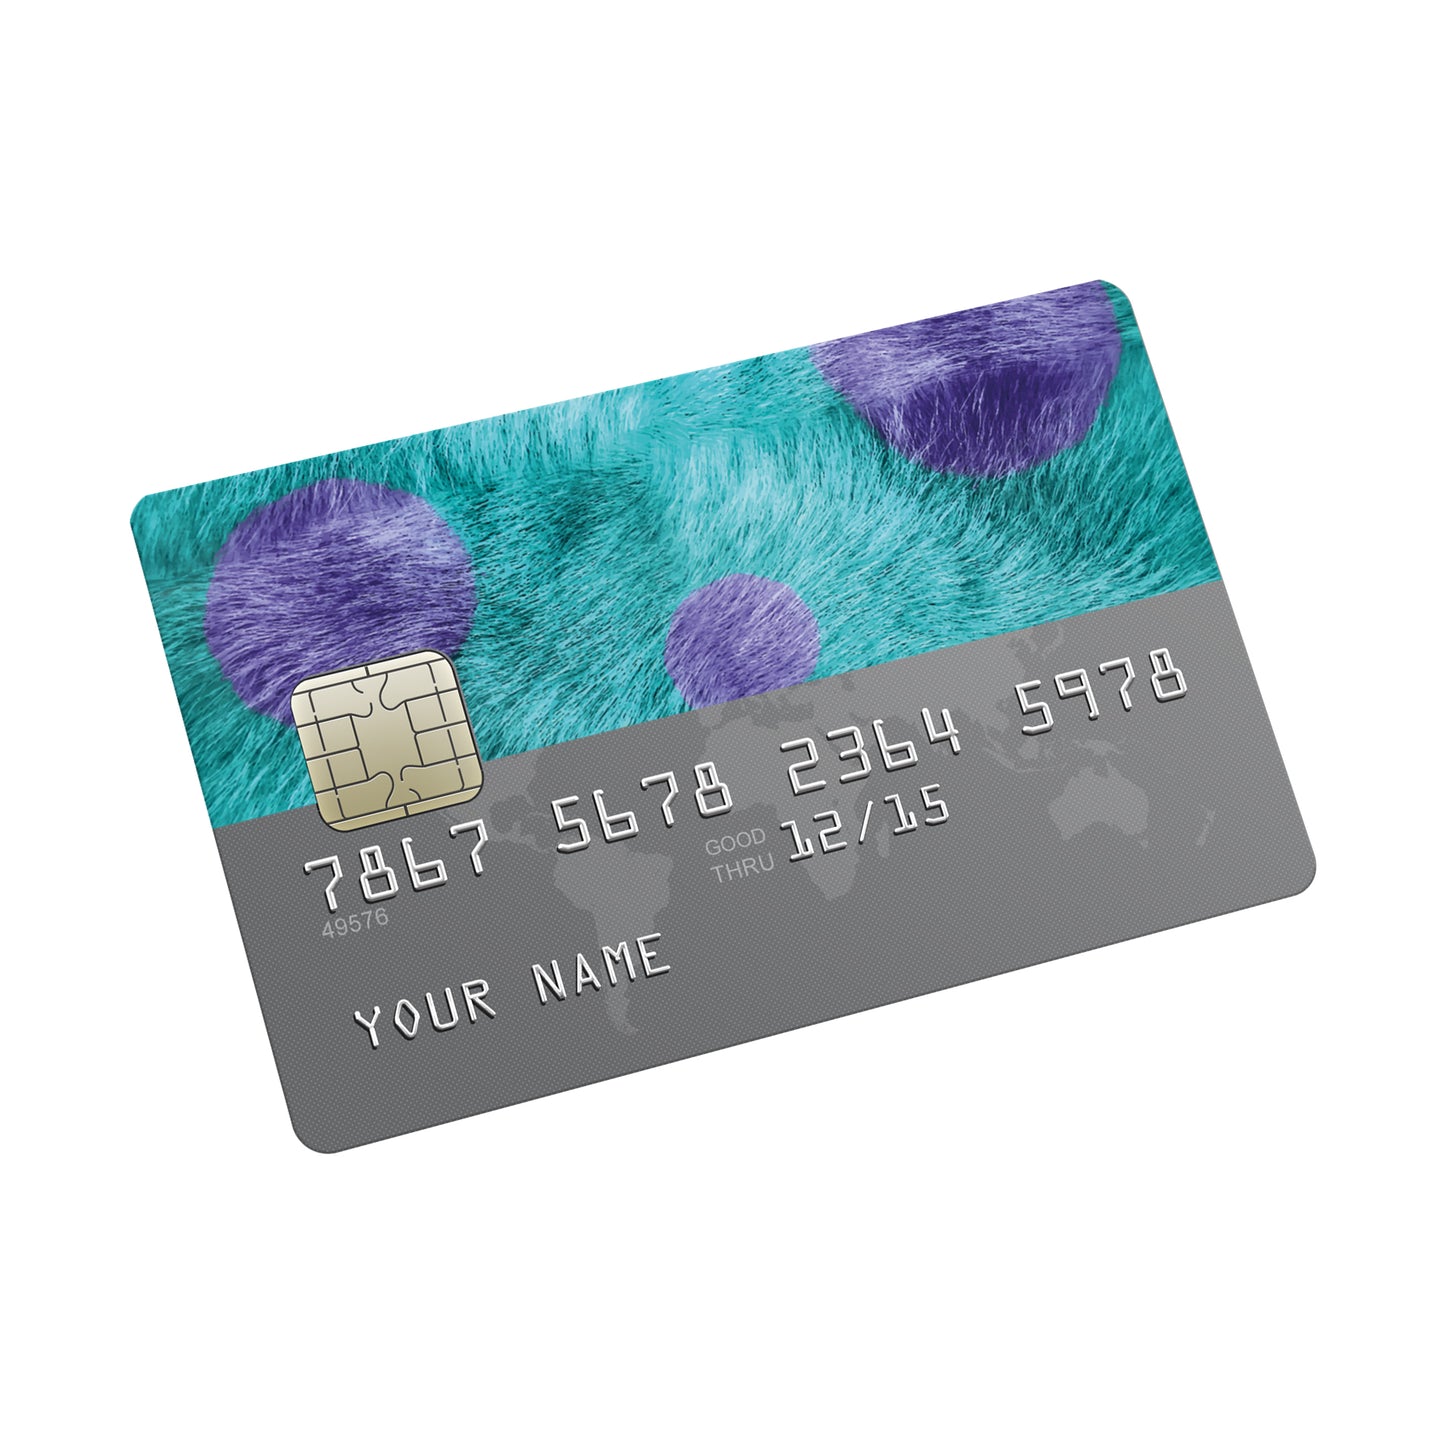 Sully Credit card Sticker